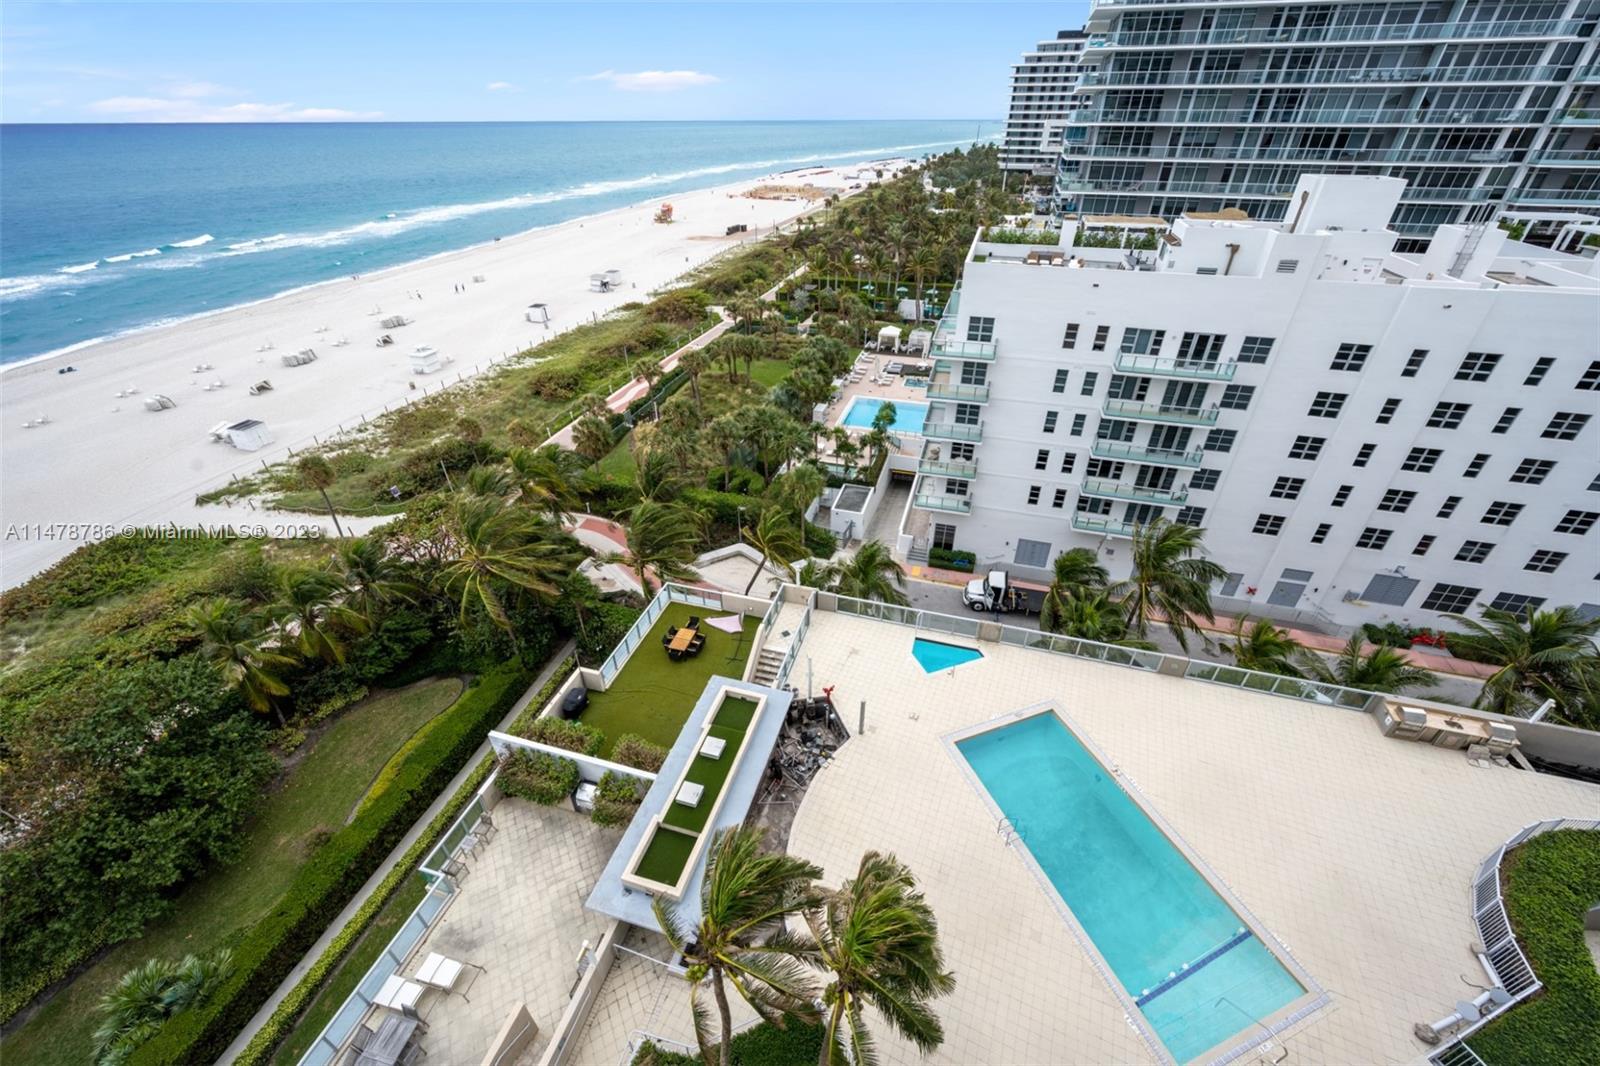 Rental Property at 3801 Collins Ave 1105, Miami Beach, Miami-Dade County, Florida - Bedrooms: 3 
Bathrooms: 3  - $12,000 MO.